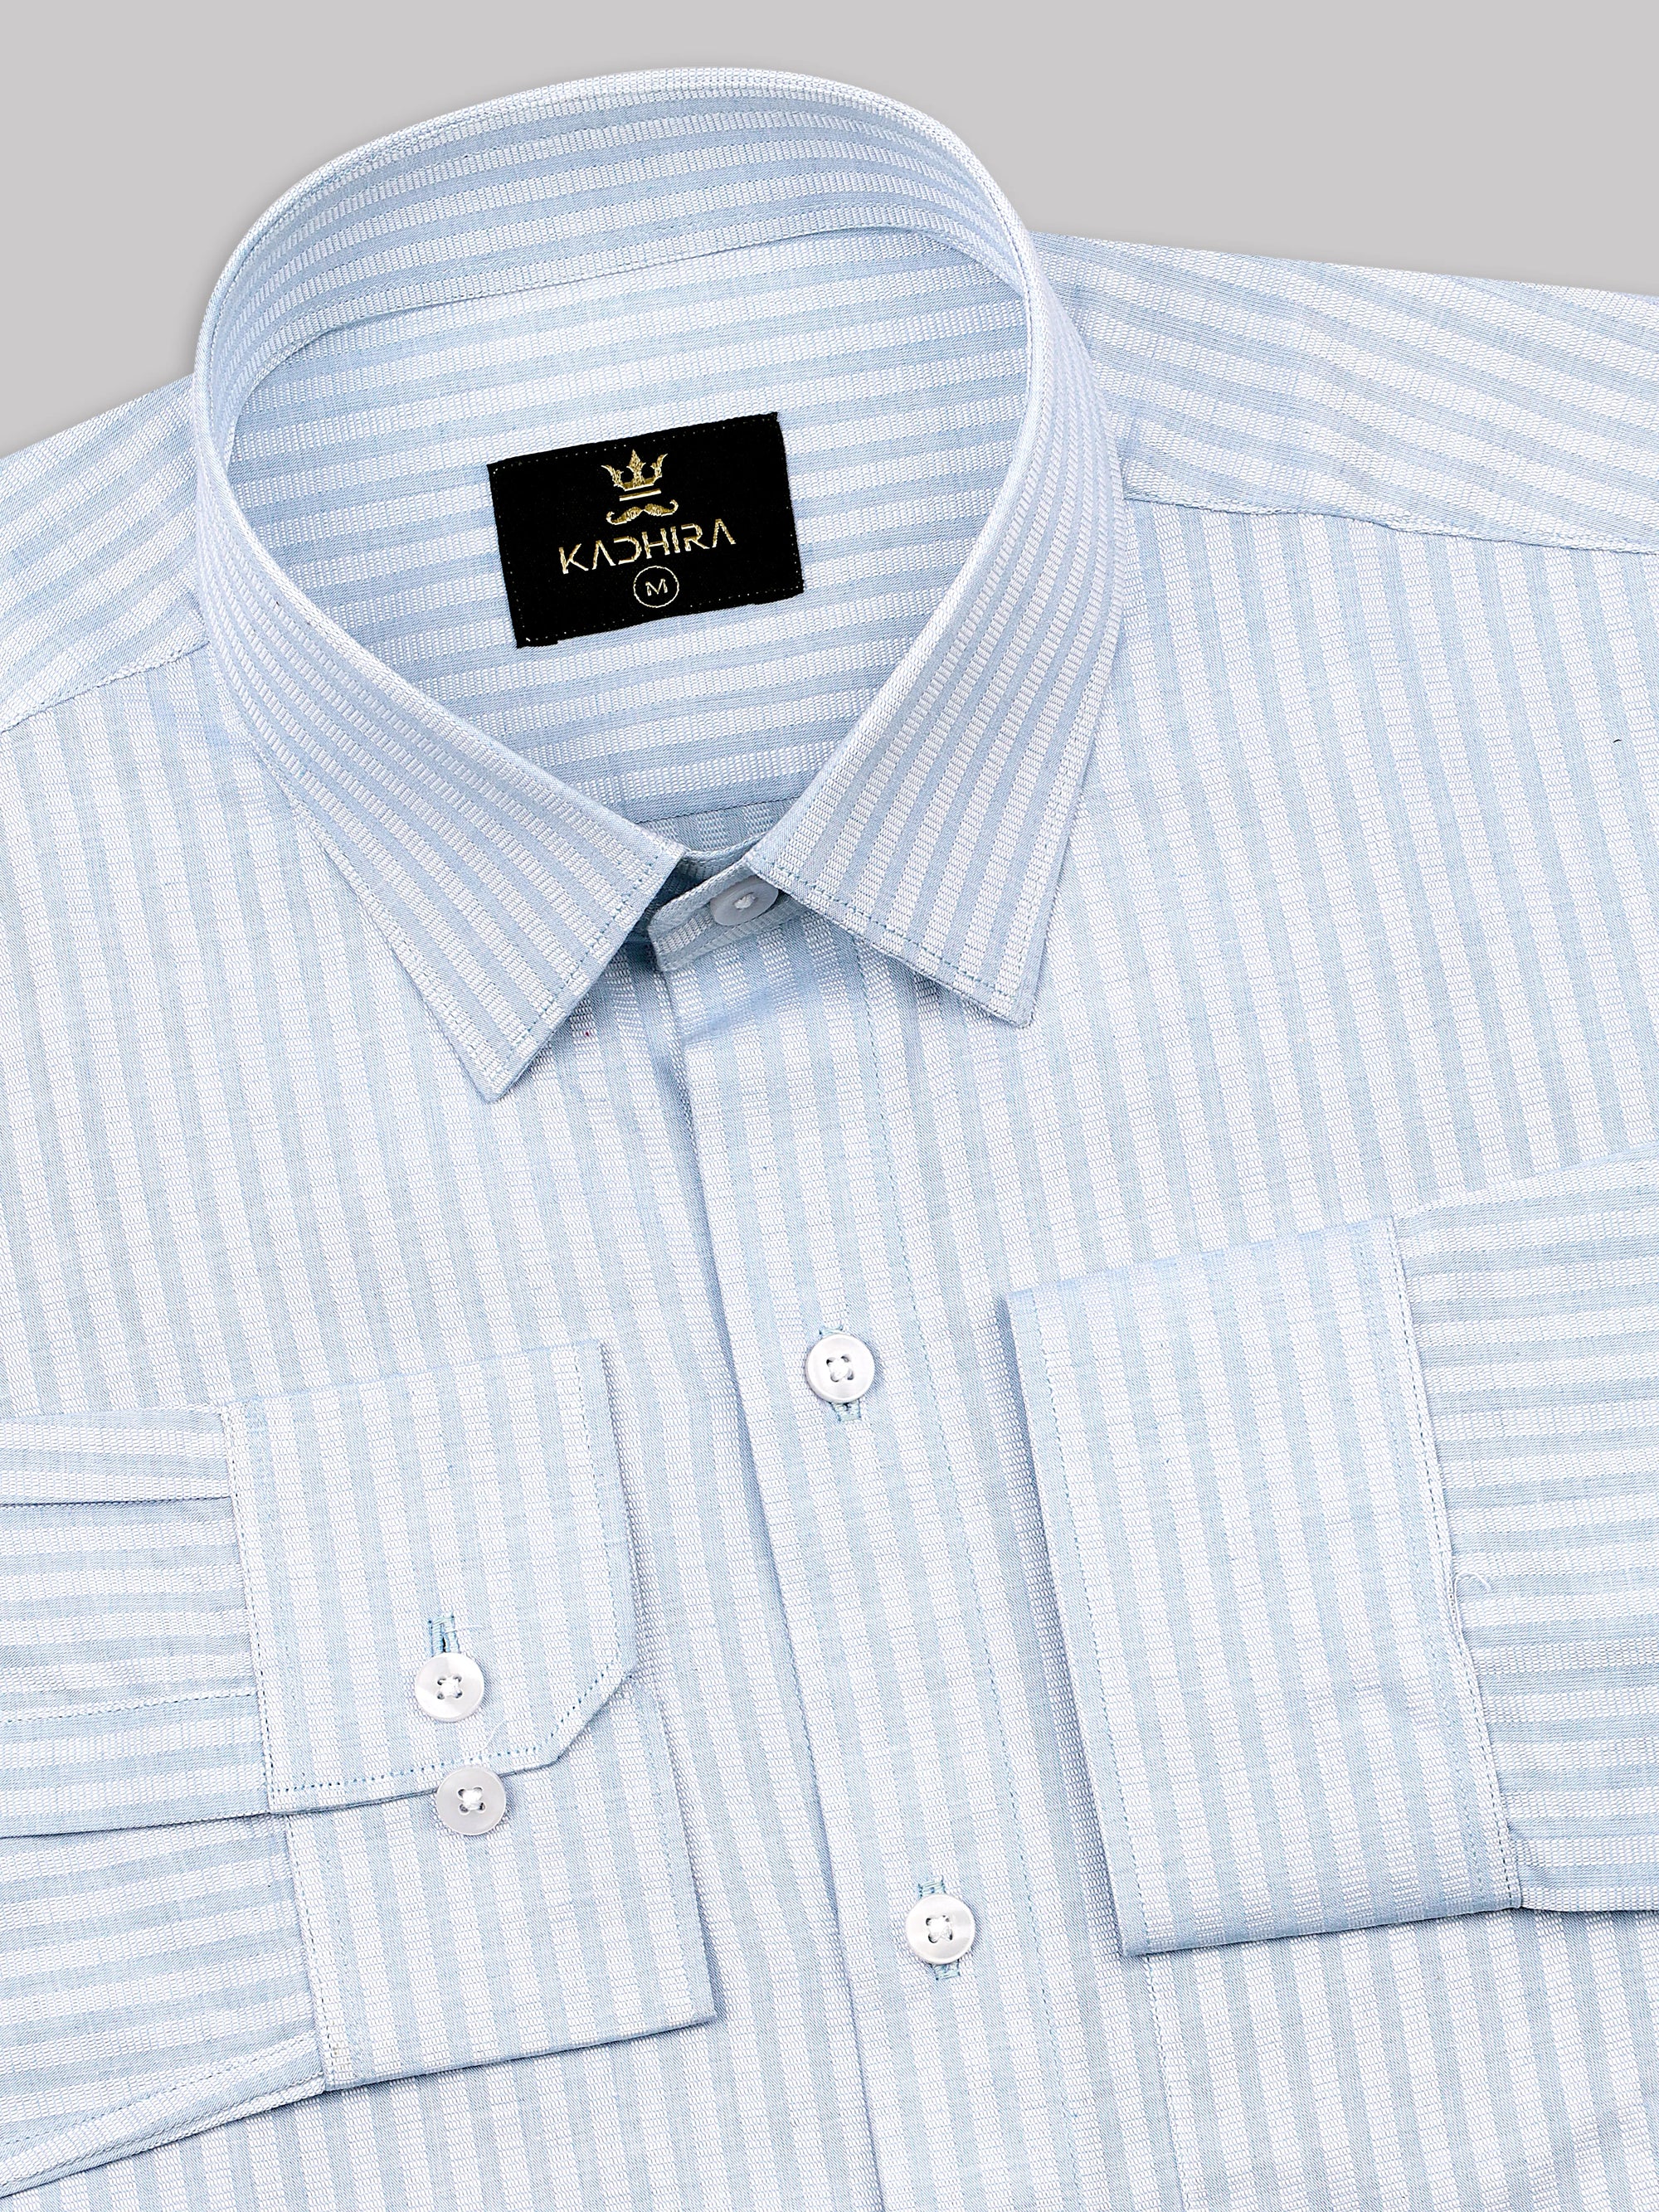 Powder Blue With White Bengal Striped Super Premium Cotton Shirt-[ON SALE]